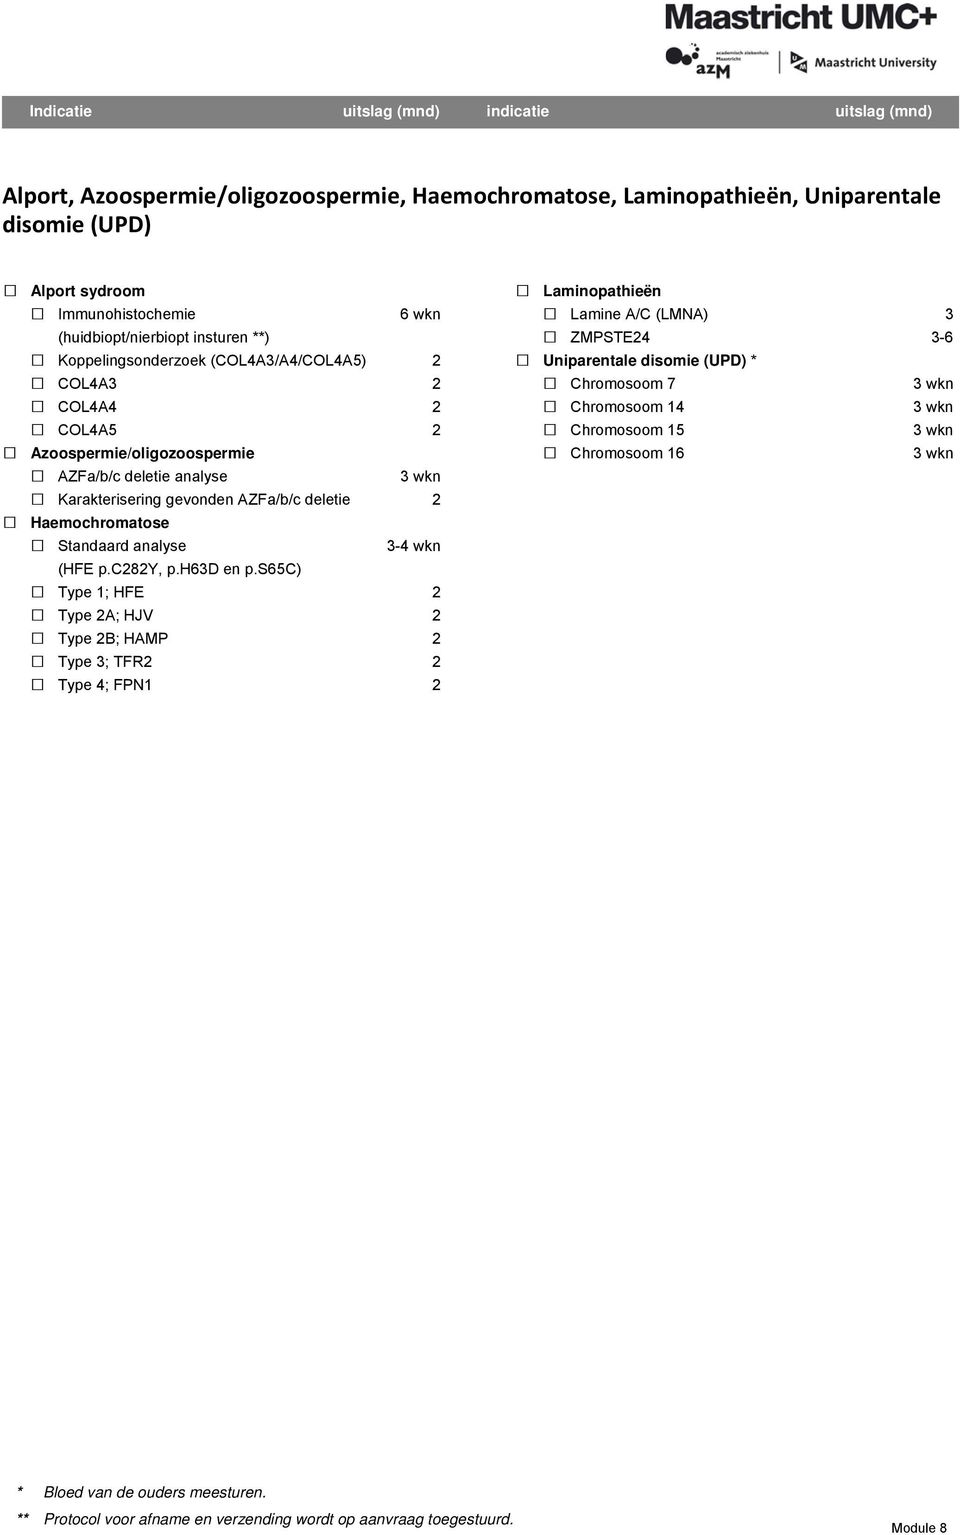 deletie 2 Haemochromatose Standaard analyse 3-4 wkn (HFE p.c282y, p.h63d en p.